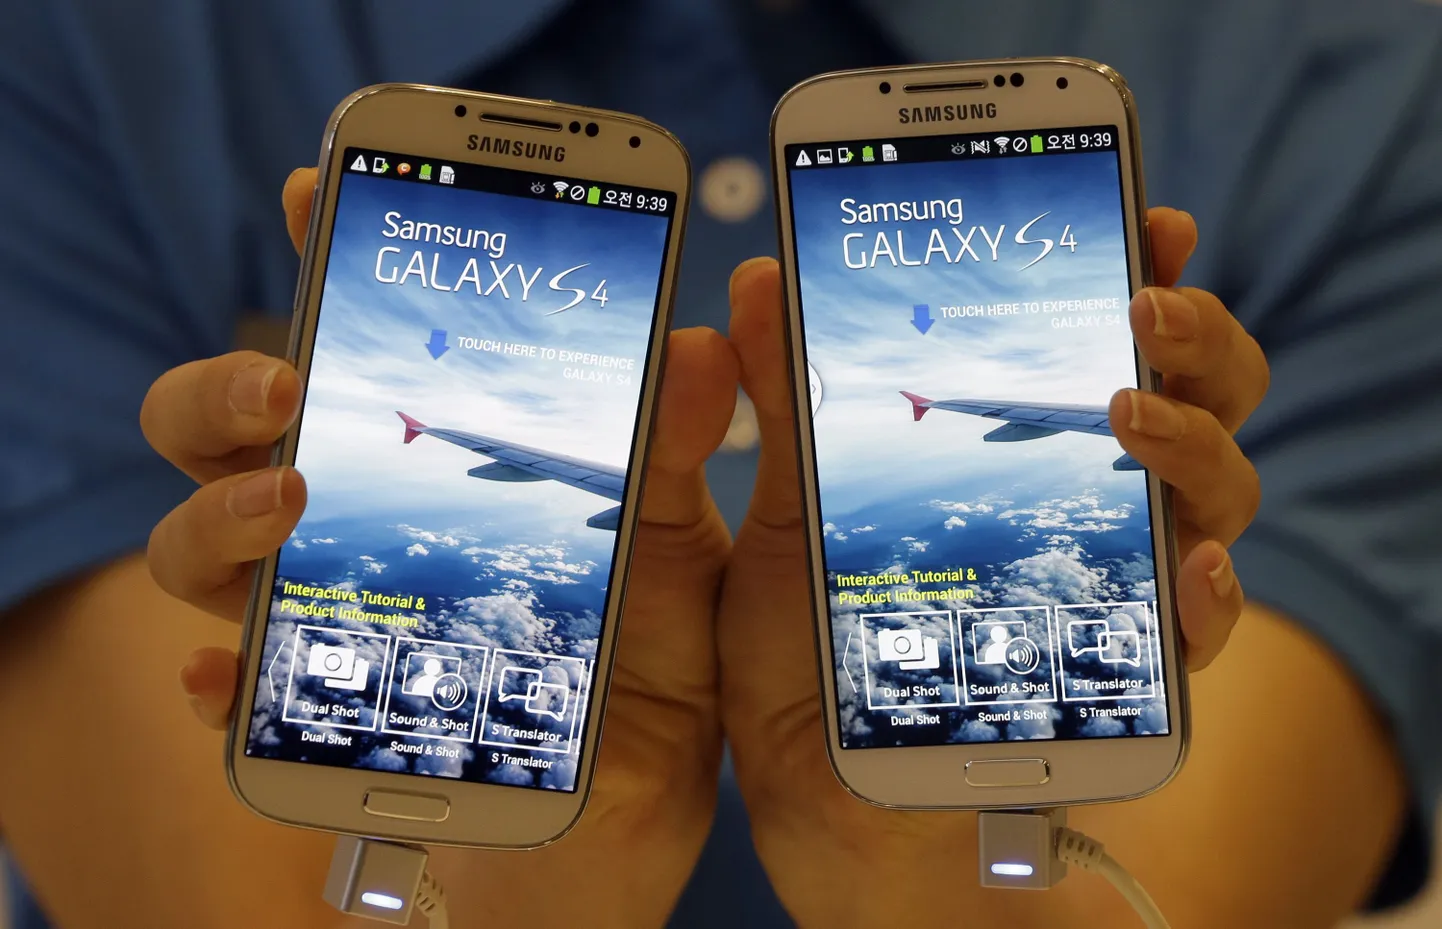 Samsung Galaxy S4. Иллюстративное фото.